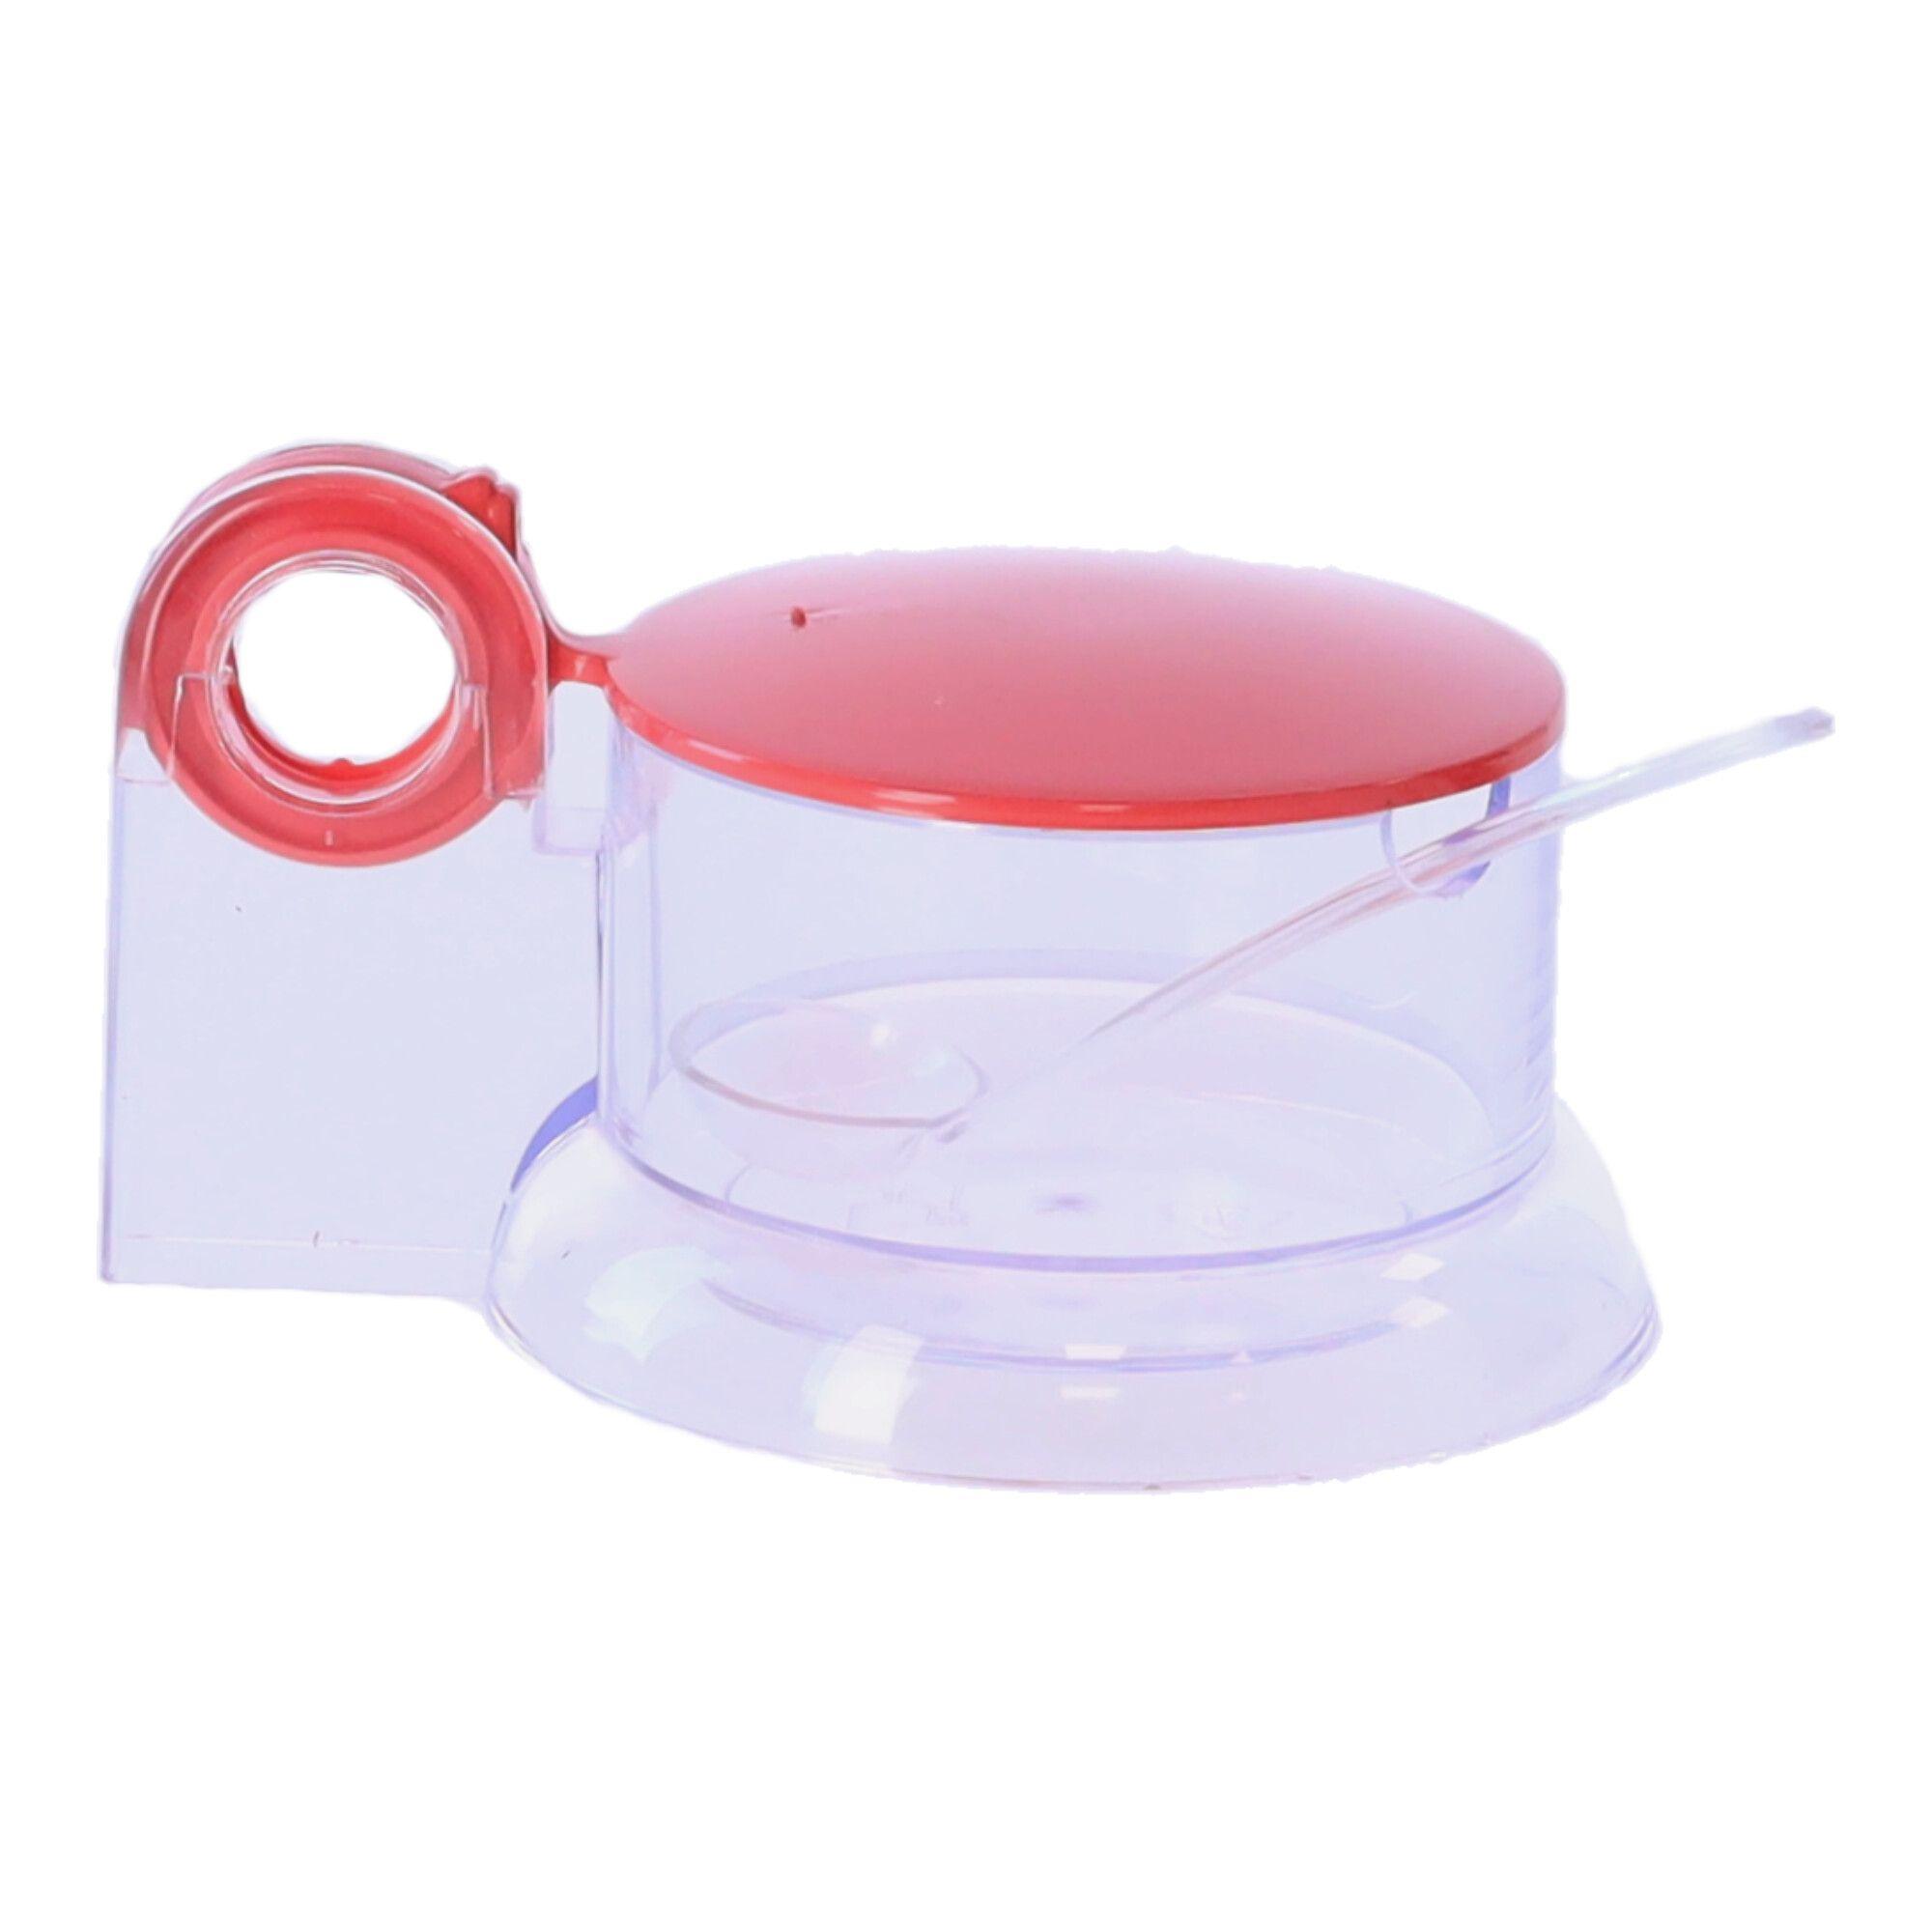 Plastic sugar bowl with a spoon 150 ml, POLISH PRODUCT